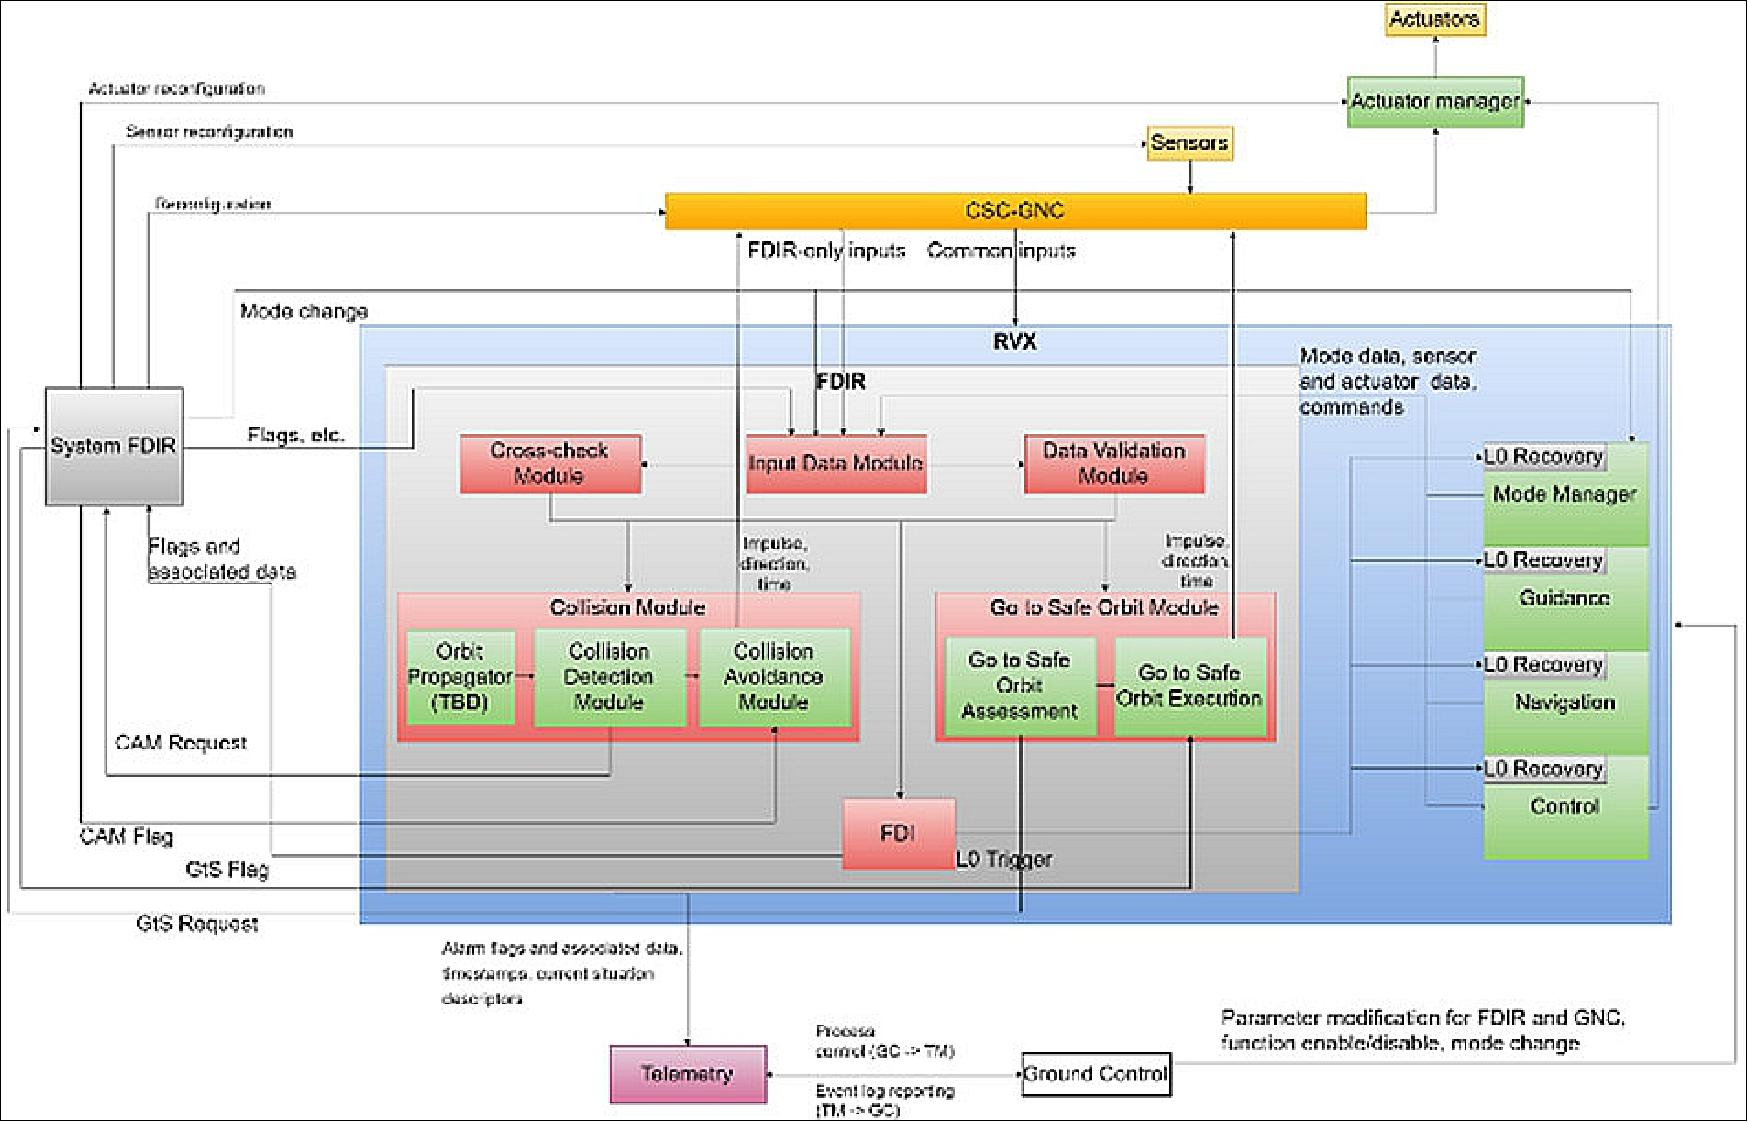 Figure 73: Overall FDIR architecture of CSC (image credit: P3RVX Team)